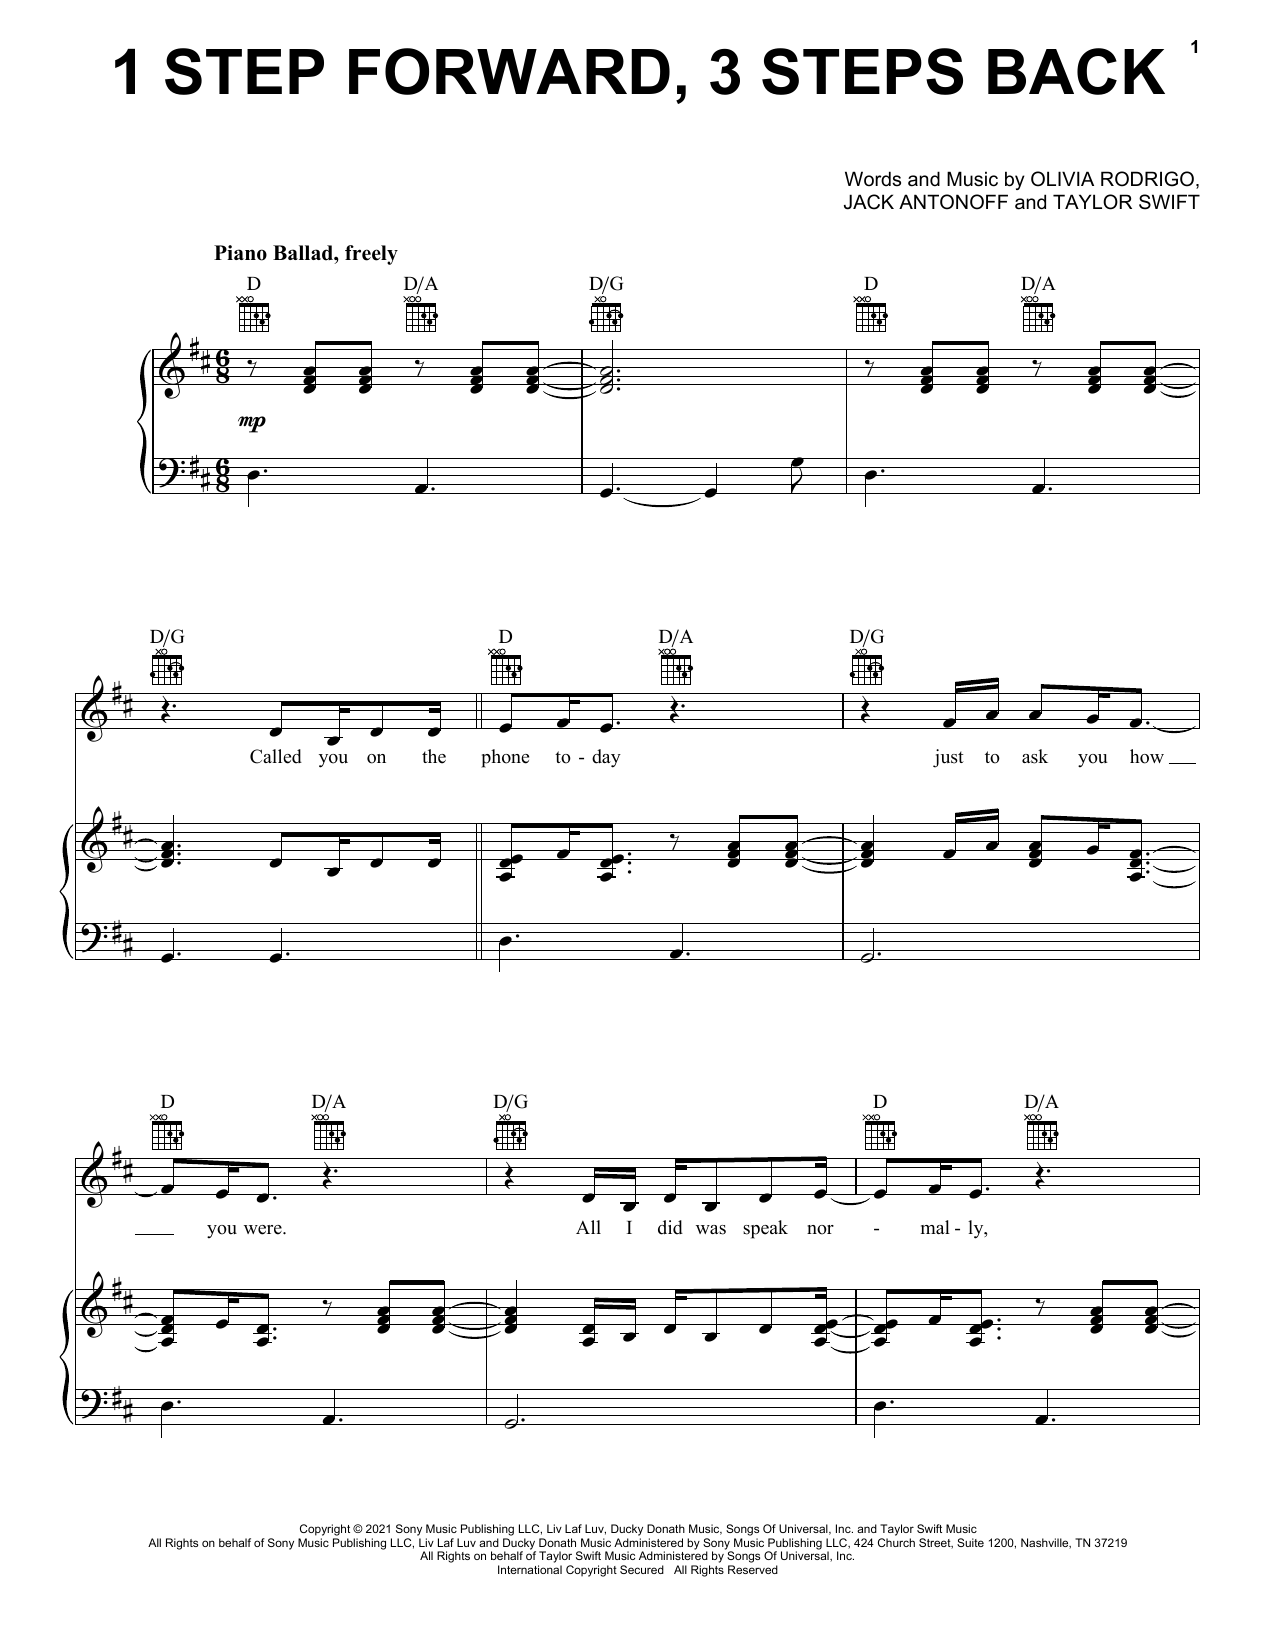 Download Olivia Rodrigo 1 step forward, 3 steps back Sheet Music and learn how to play Ukulele PDF digital score in minutes